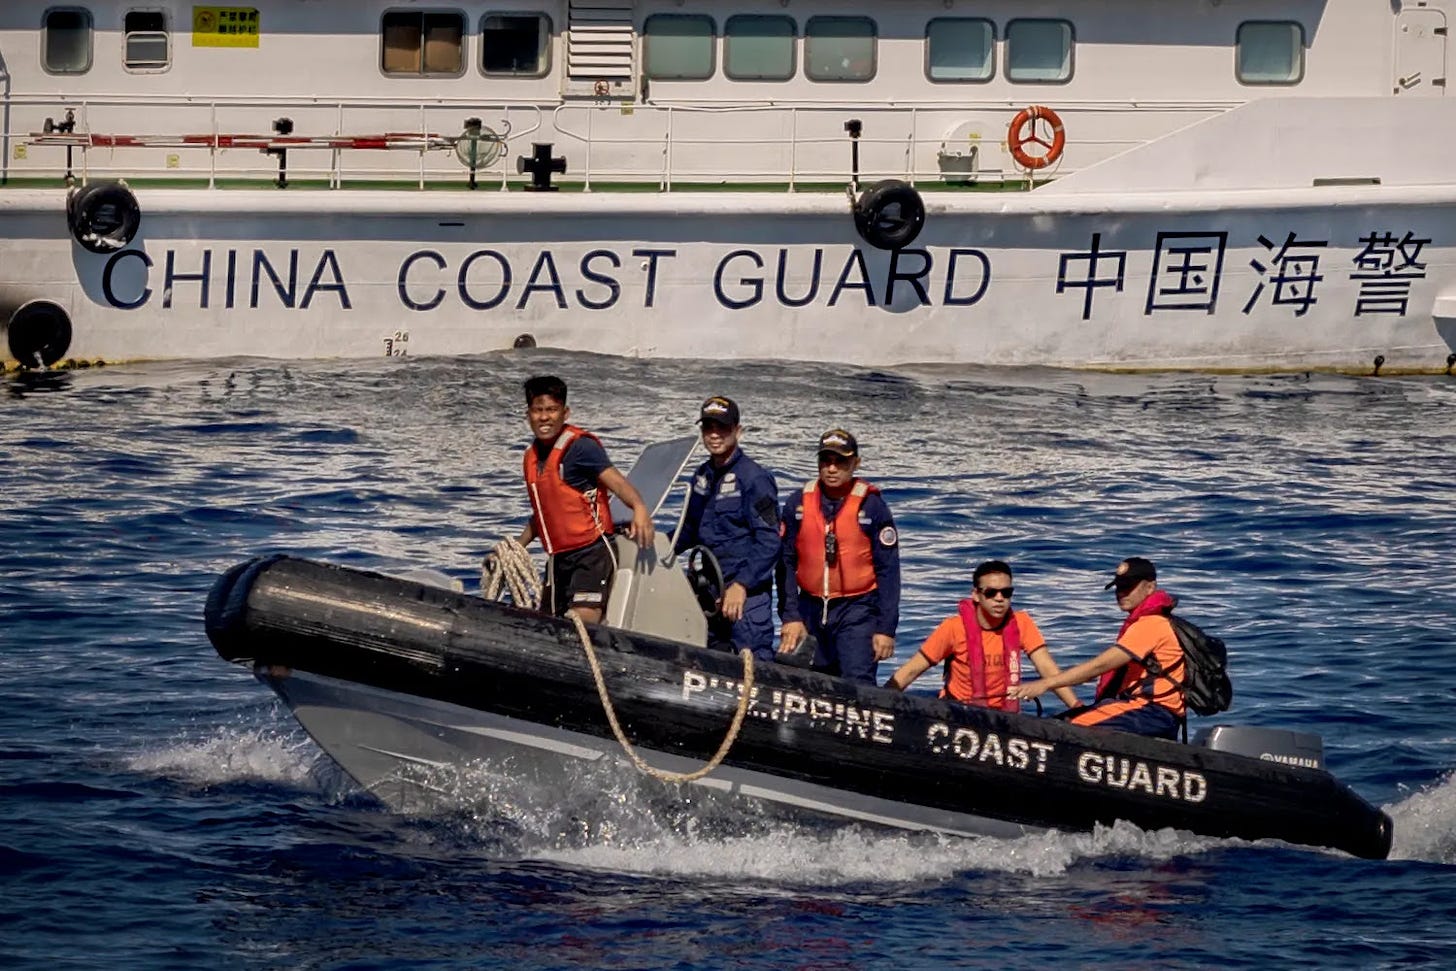 Philippine Coast Guard personnel ride a rubber boat past a China Coast Guard vessel in the South China Sea.